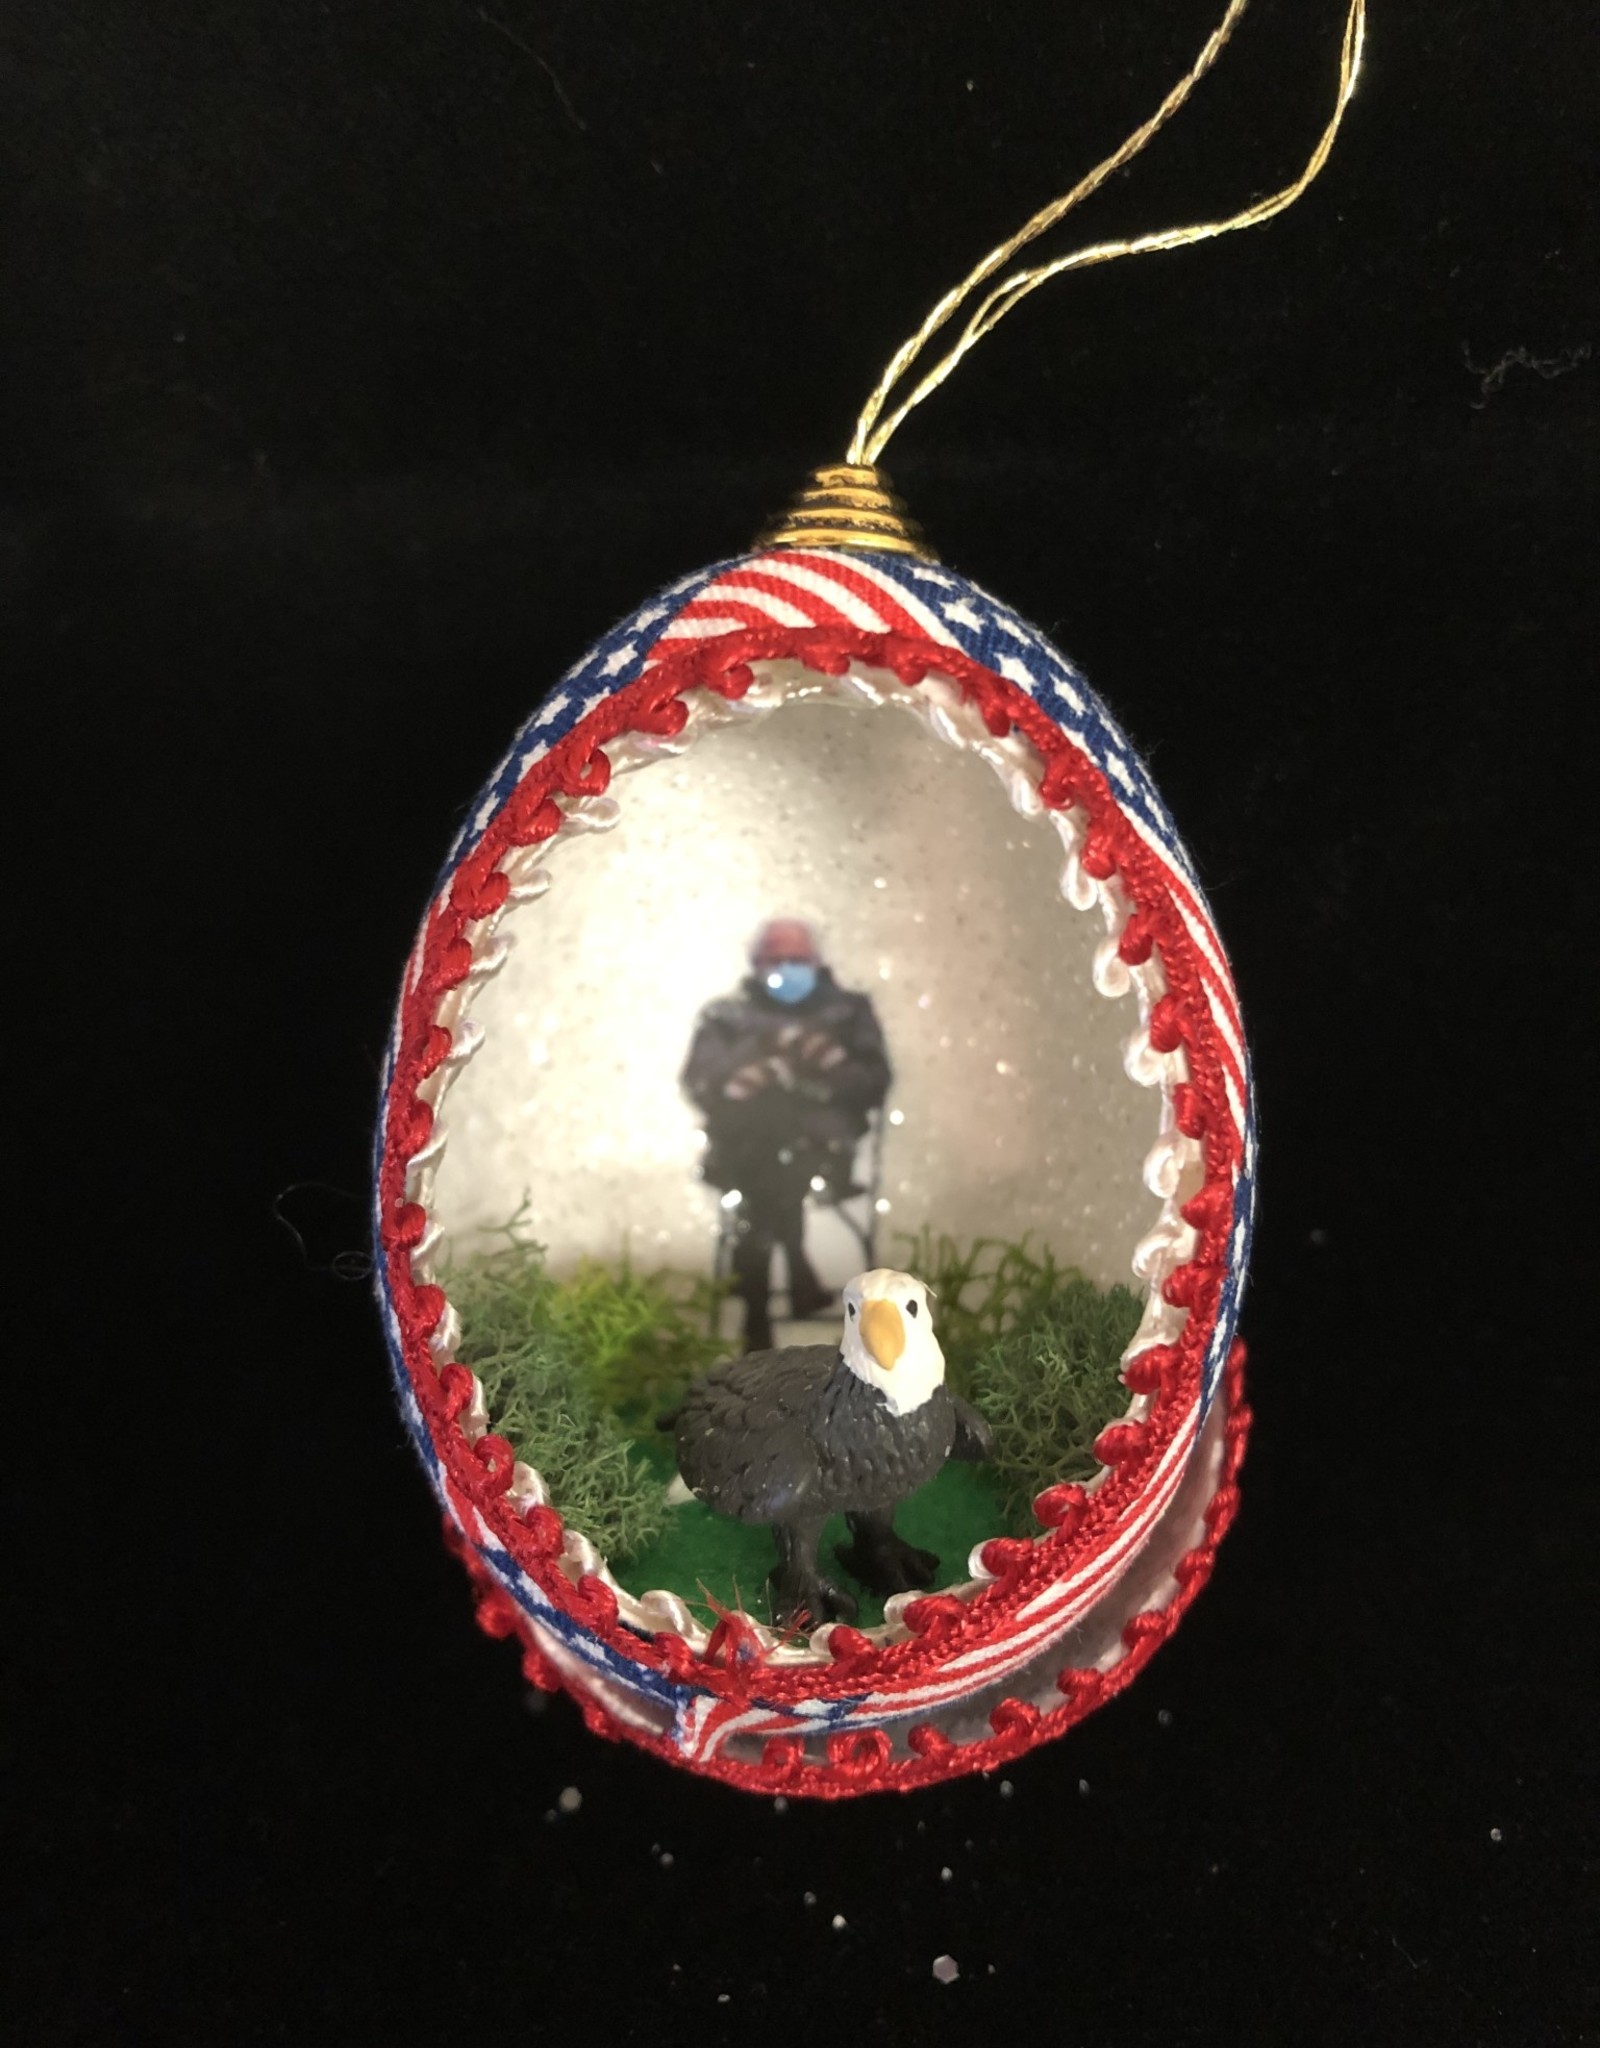 Ammi Brooks Bernie/Eagle Real Egg Ornament